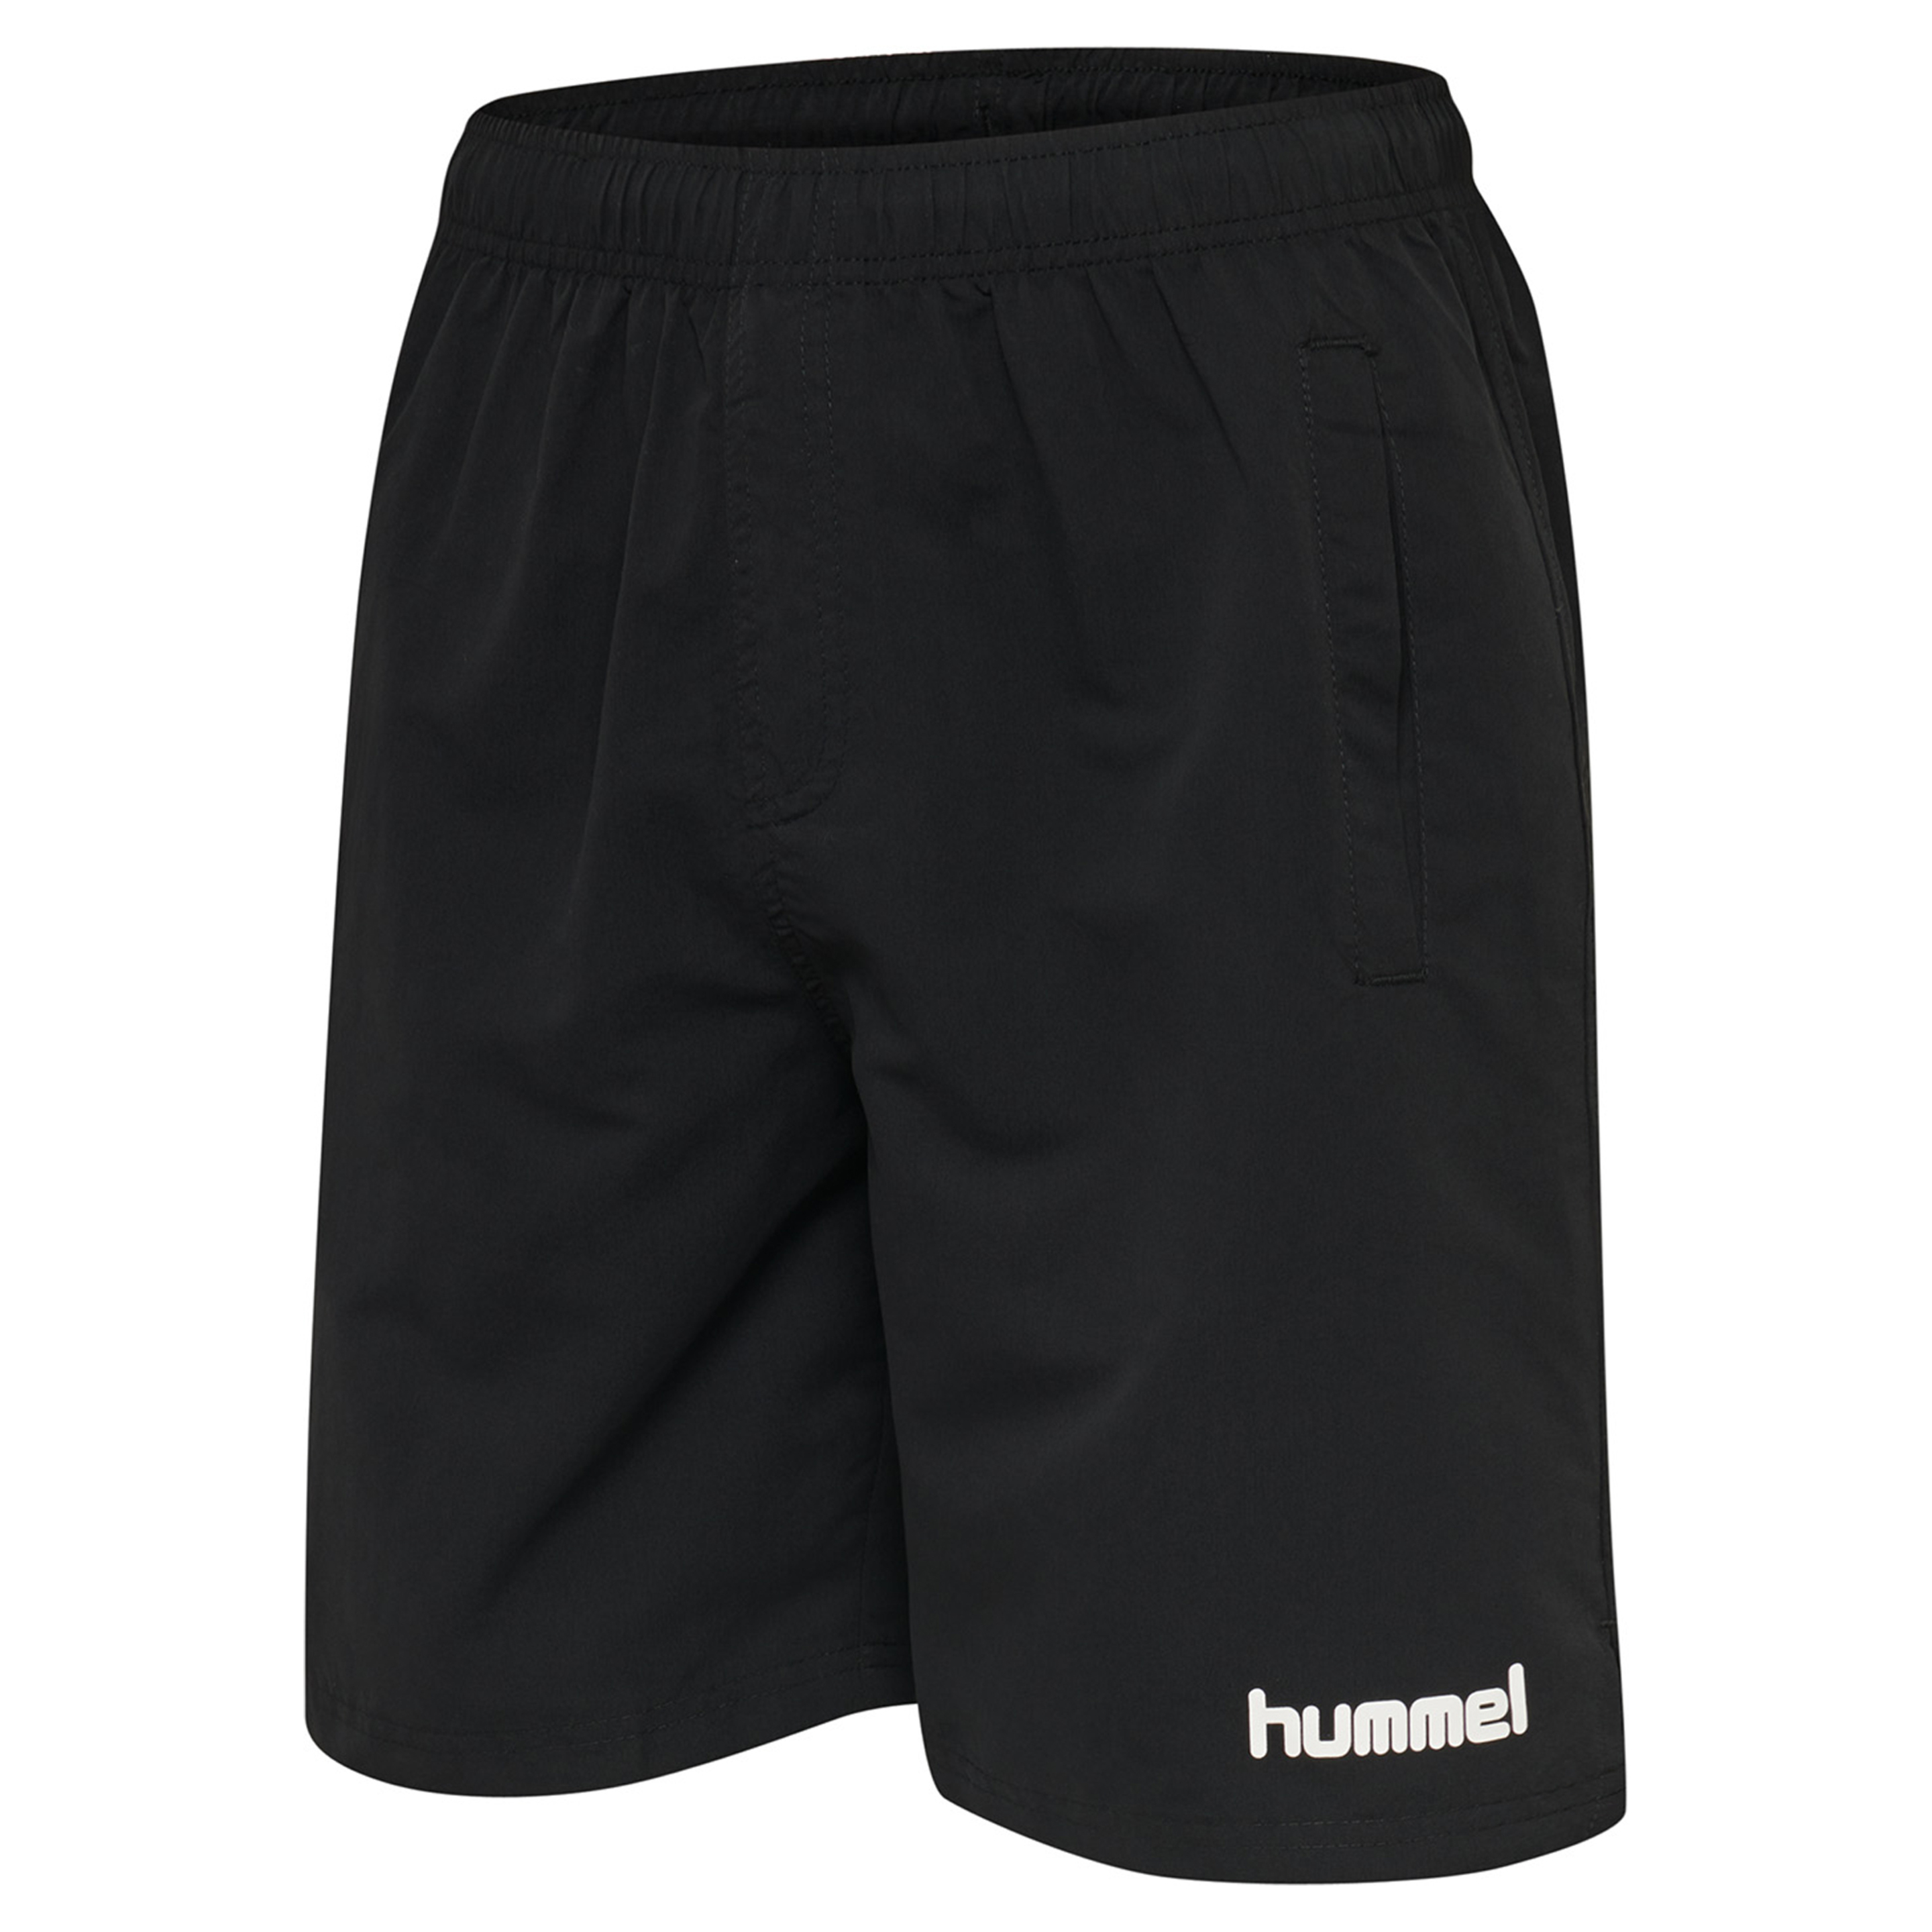 Pantalones Hummel - negro - 